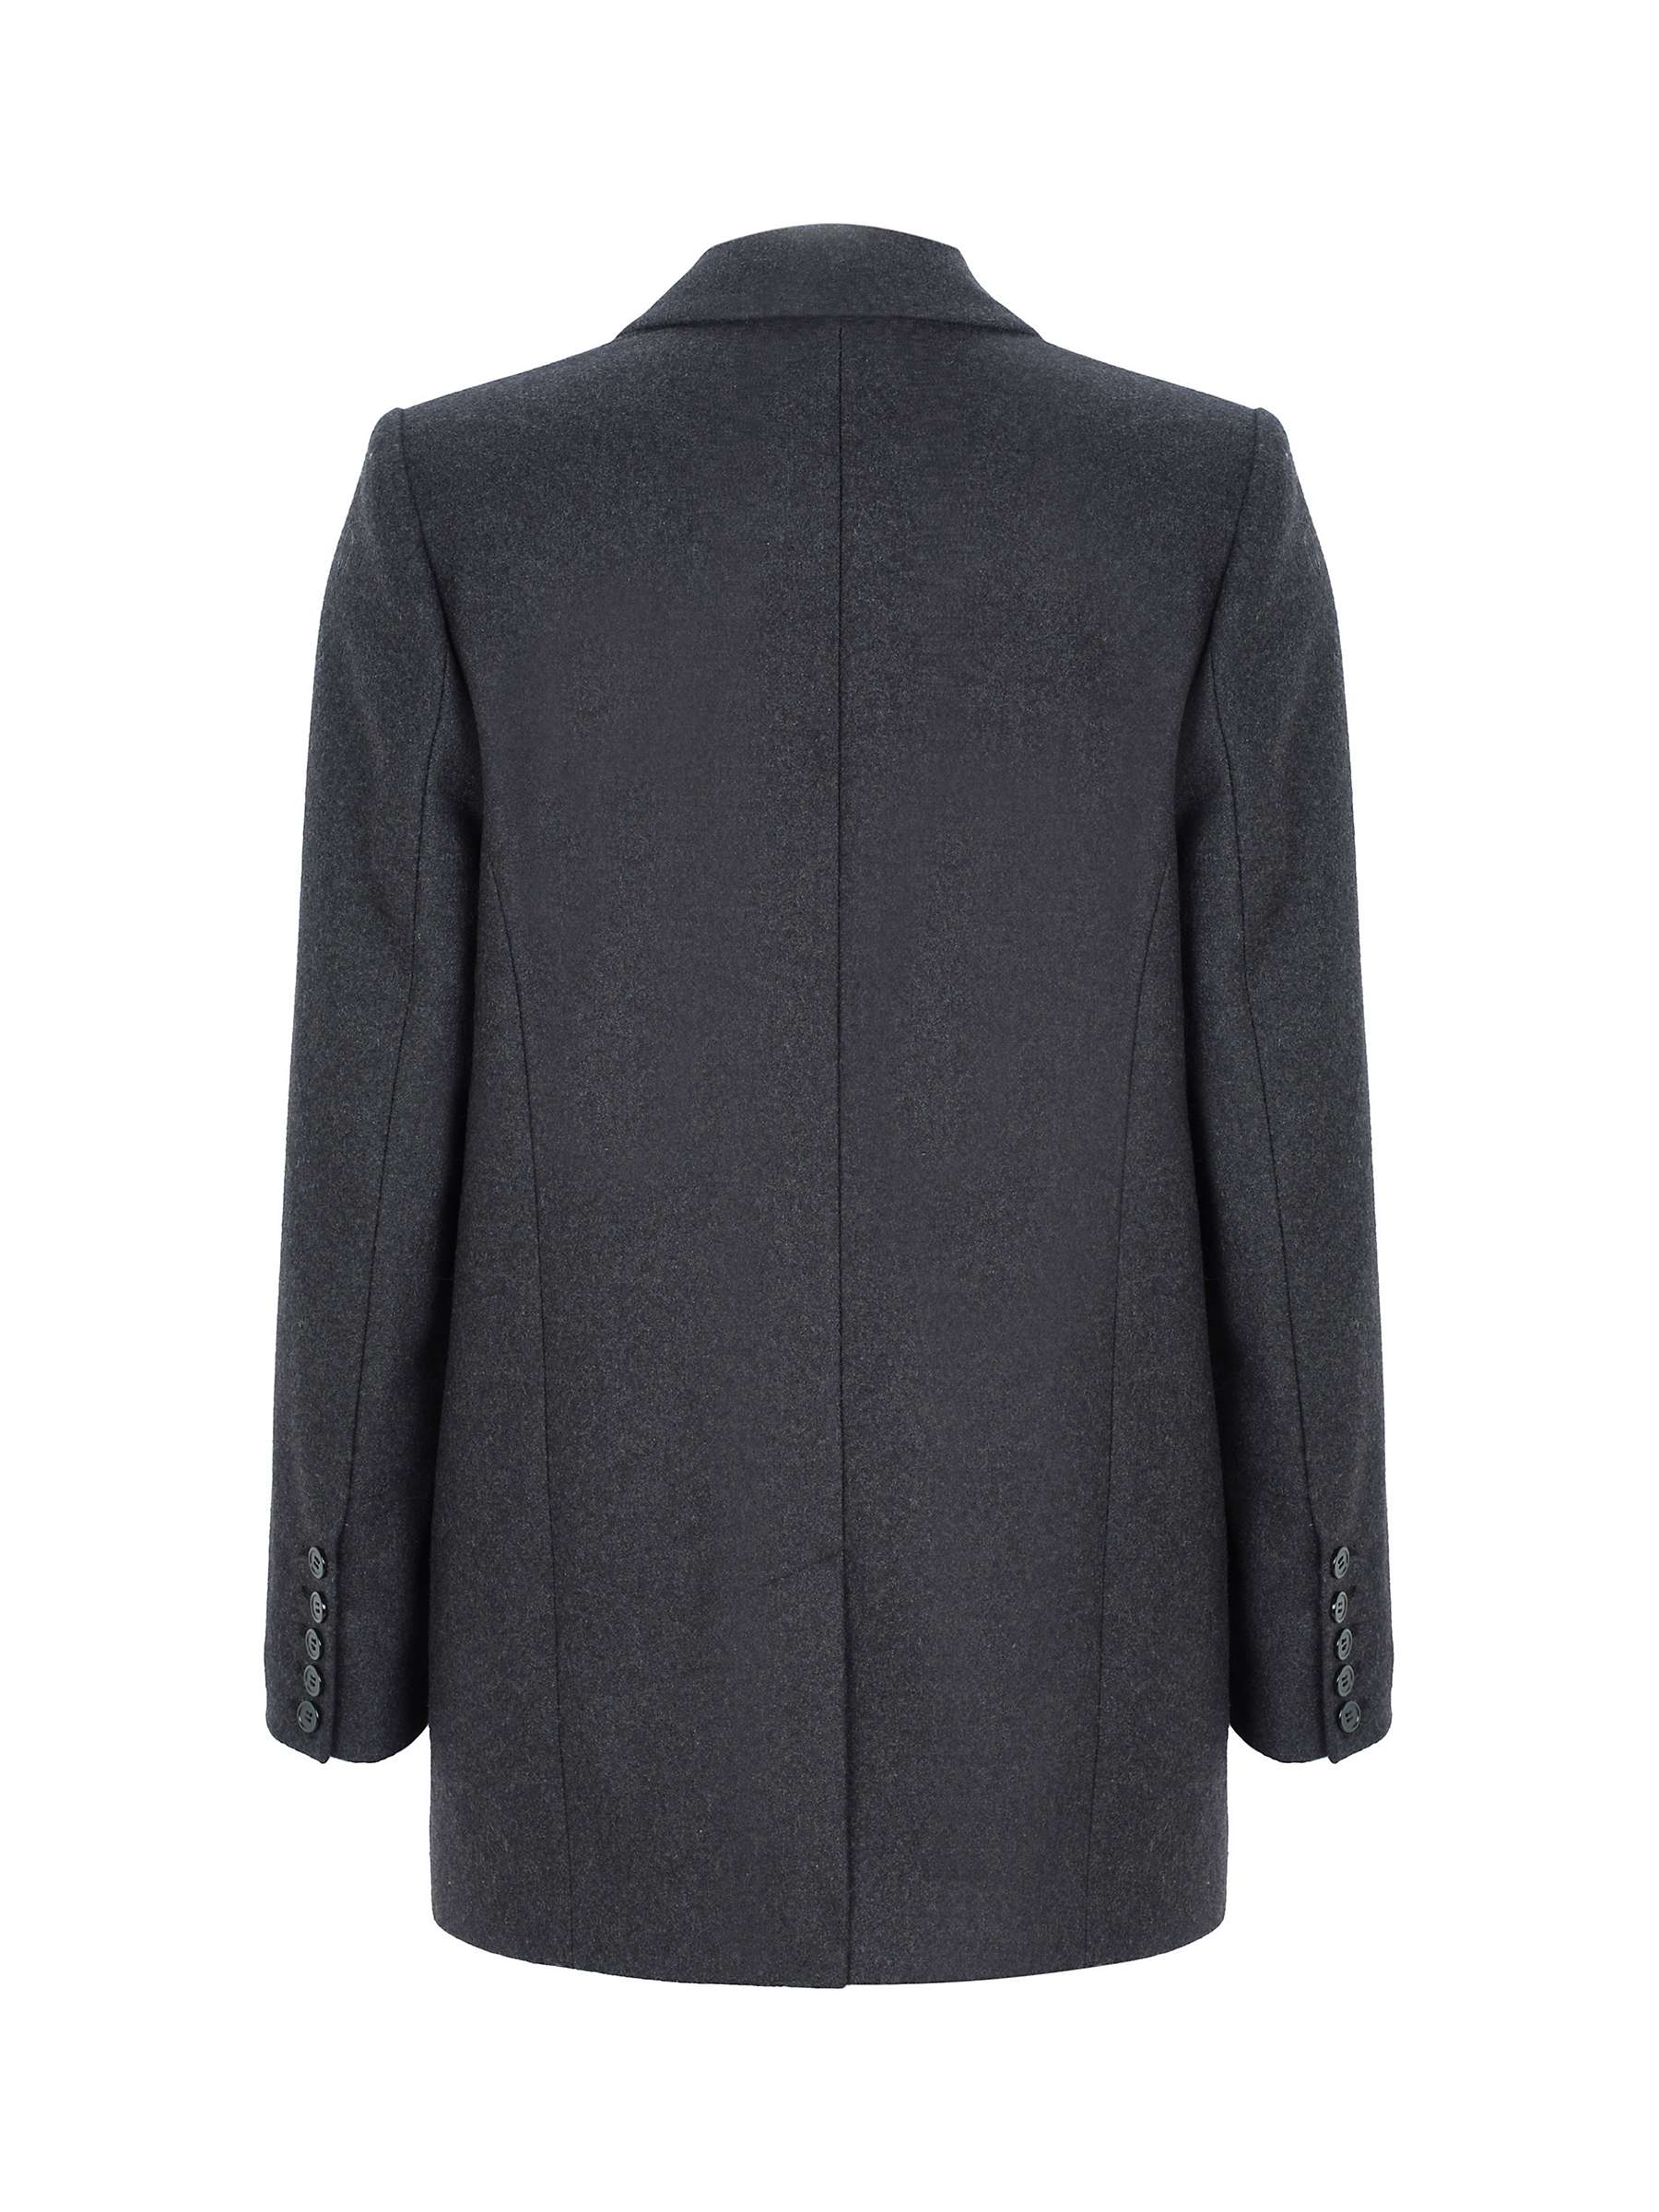 Buy Mint Velvet Wool Blend Blazer Coat, Charcoal Online at johnlewis.com